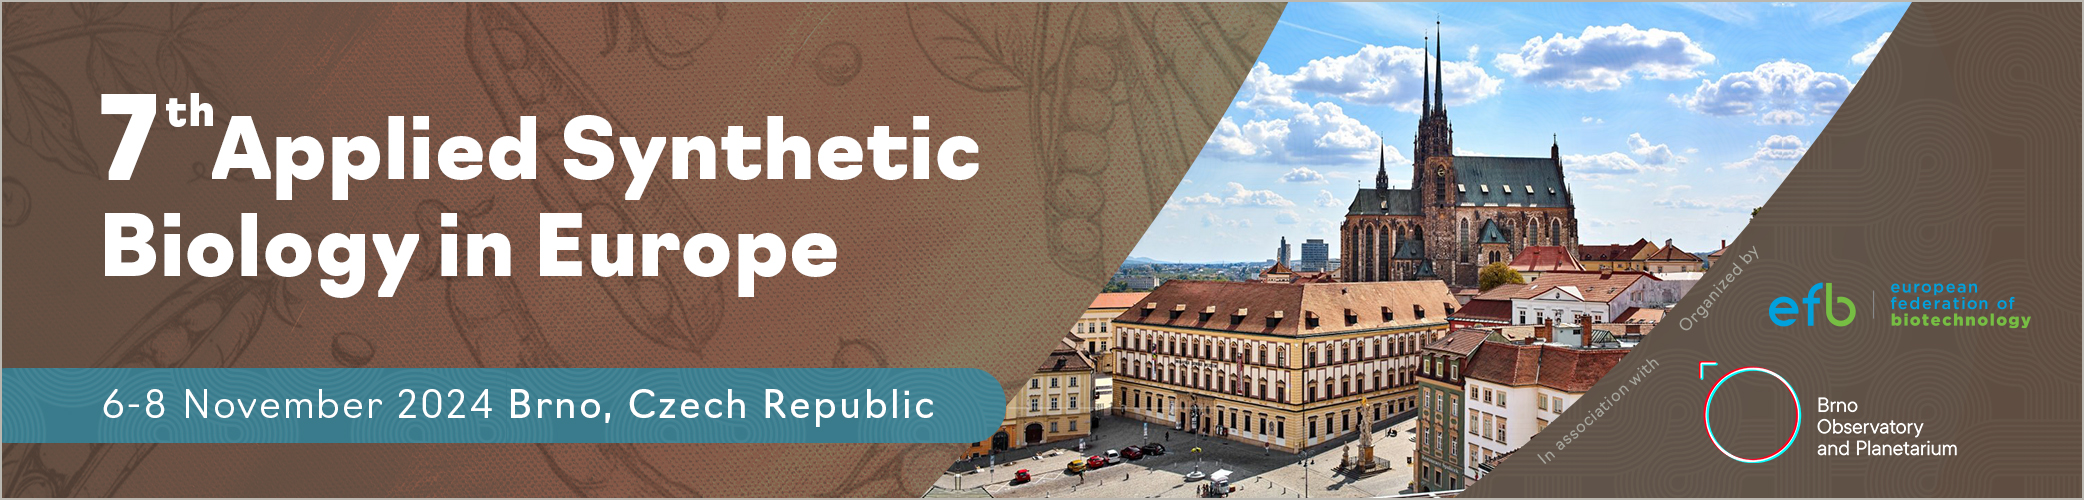 Applied Synthetic Biology in Europe Banner - 6 - 8 Novemeber, 2024, Brno, Czechia